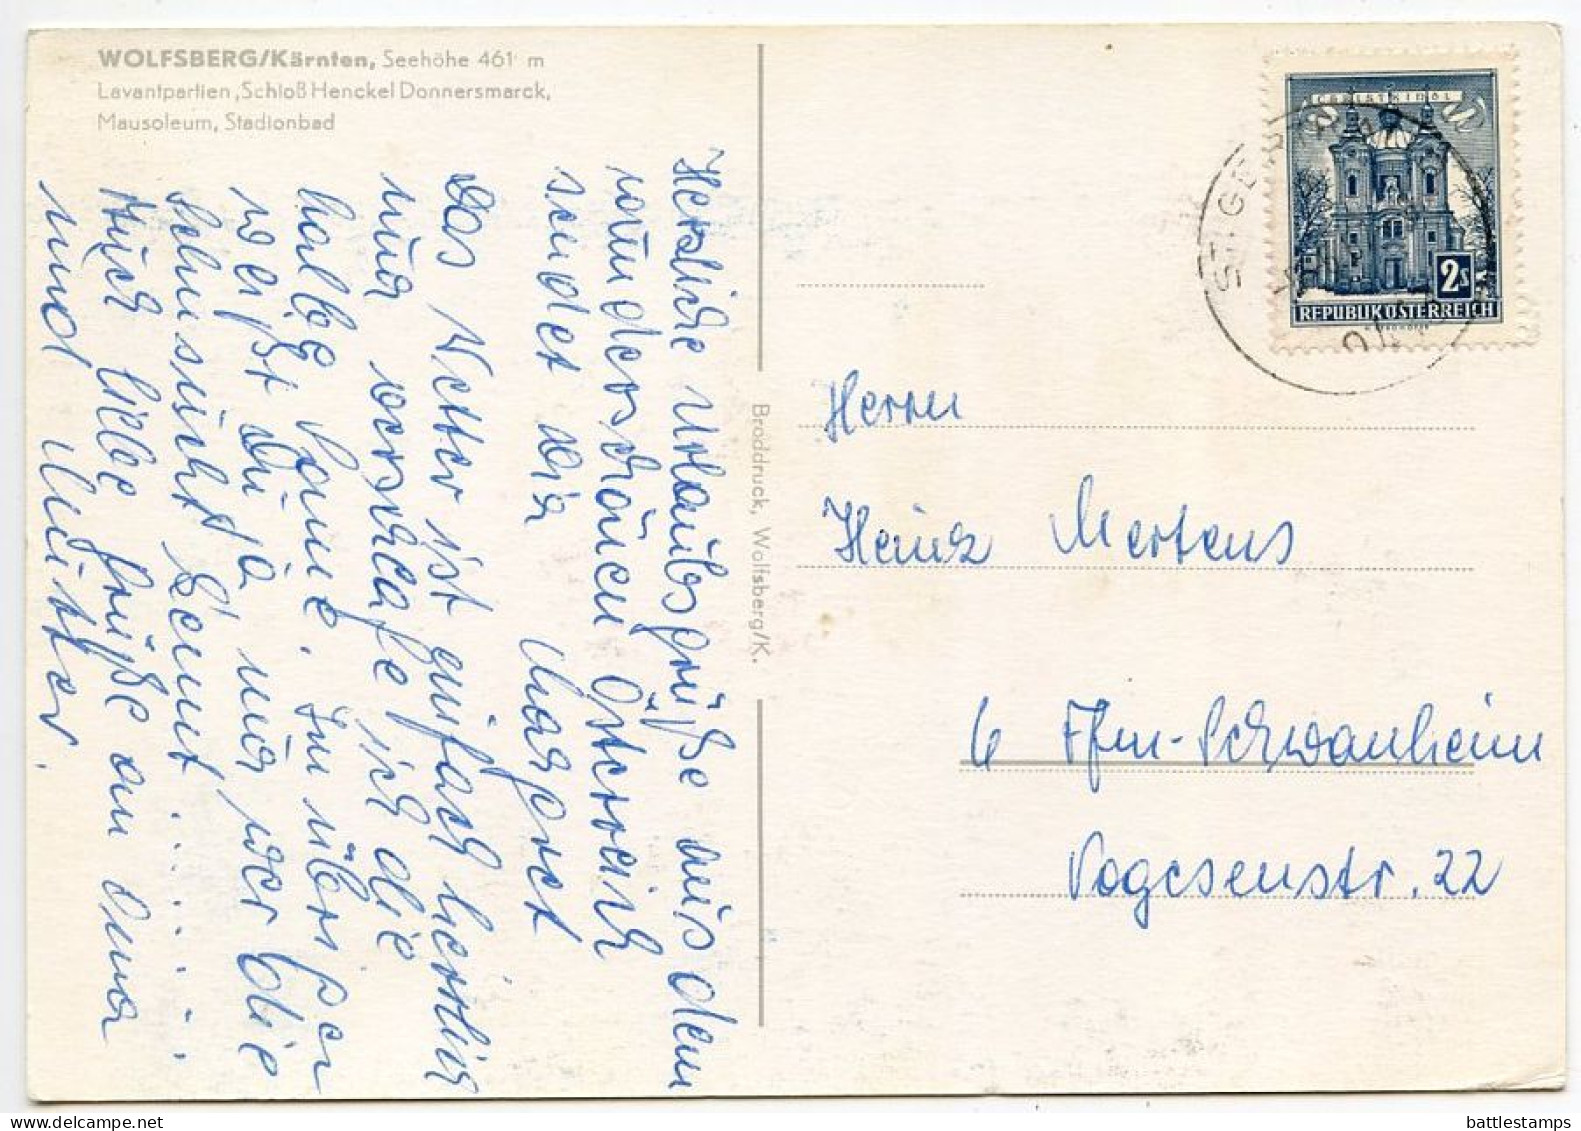 Austria 1967 Postcard Wolfsberg, Karnten - Multiple Views; St. Gertraud Postmark; 2s. Christkindl Church Stamp - Wolfsberg